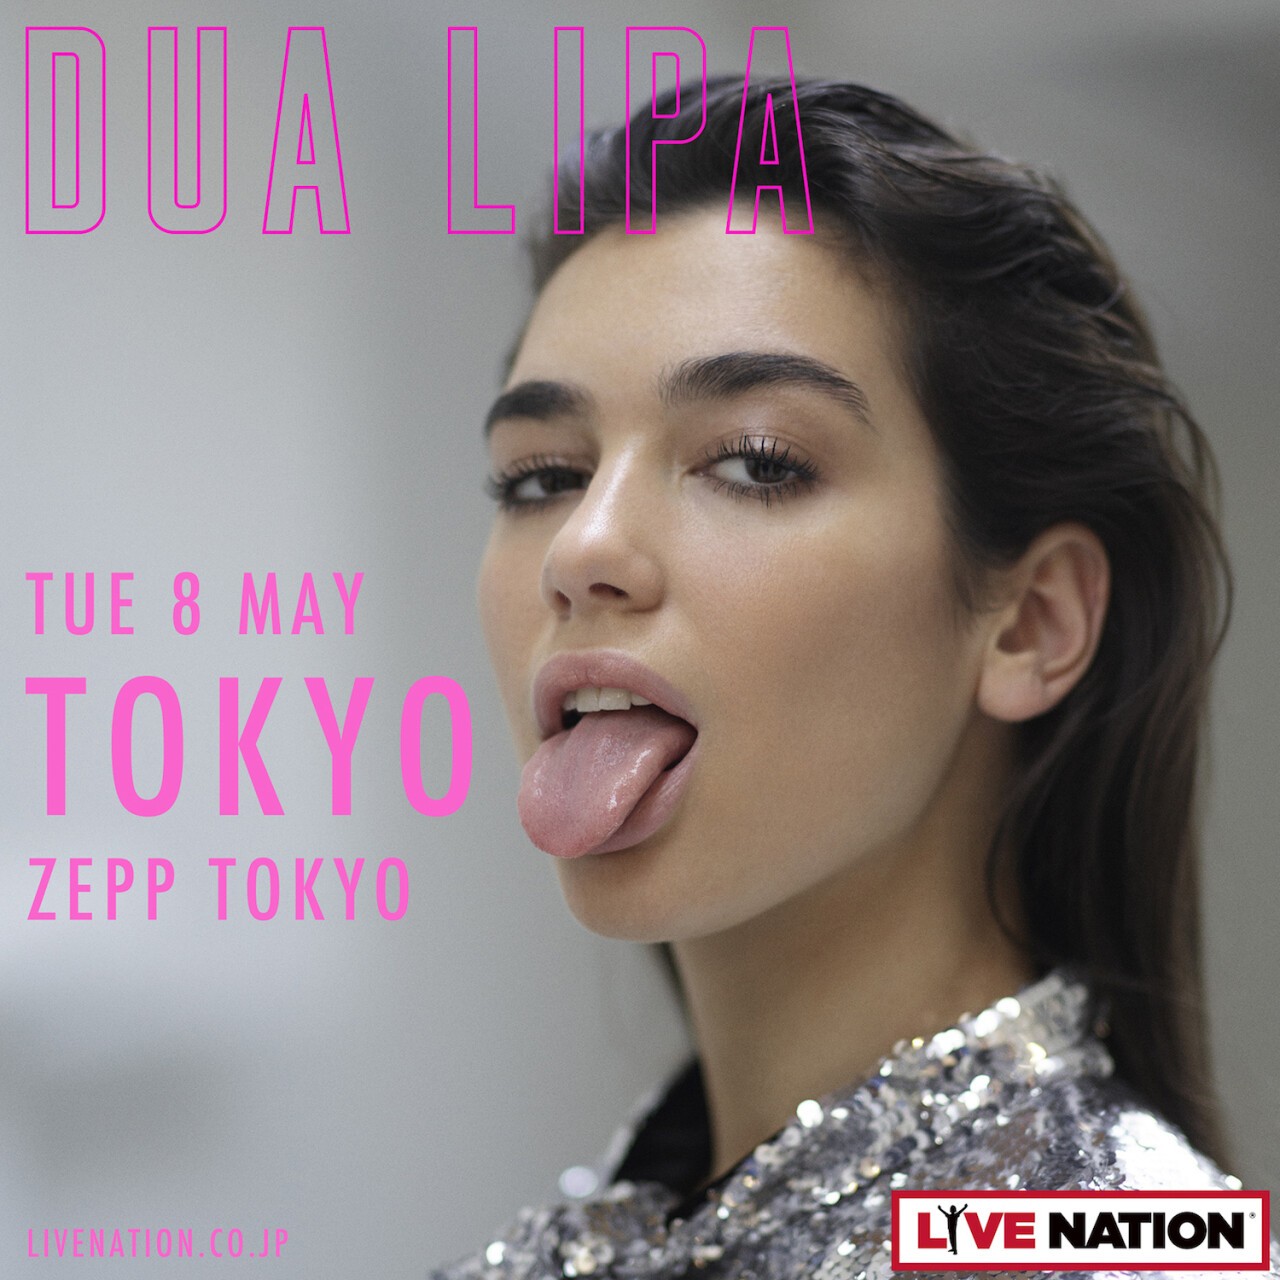 Iflyer Dua Lipa Japan Tour 18 At Zepp Tokyo Tokyo